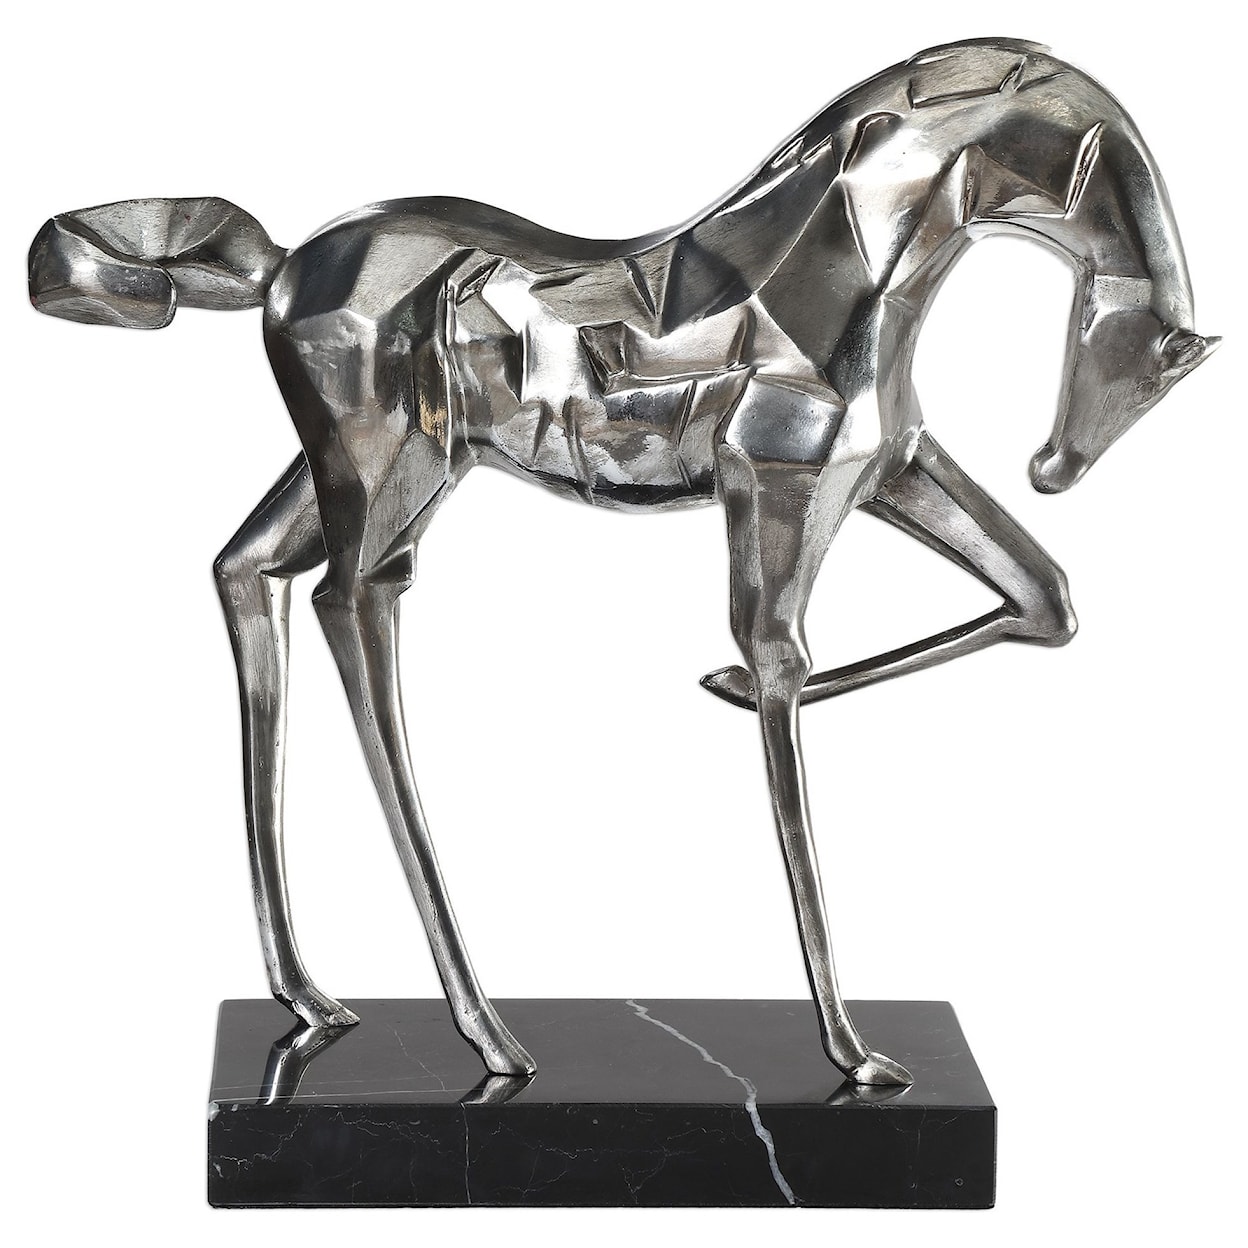 Uttermost Accessories - Statues and Figurines Phoenix Horse Sculpture